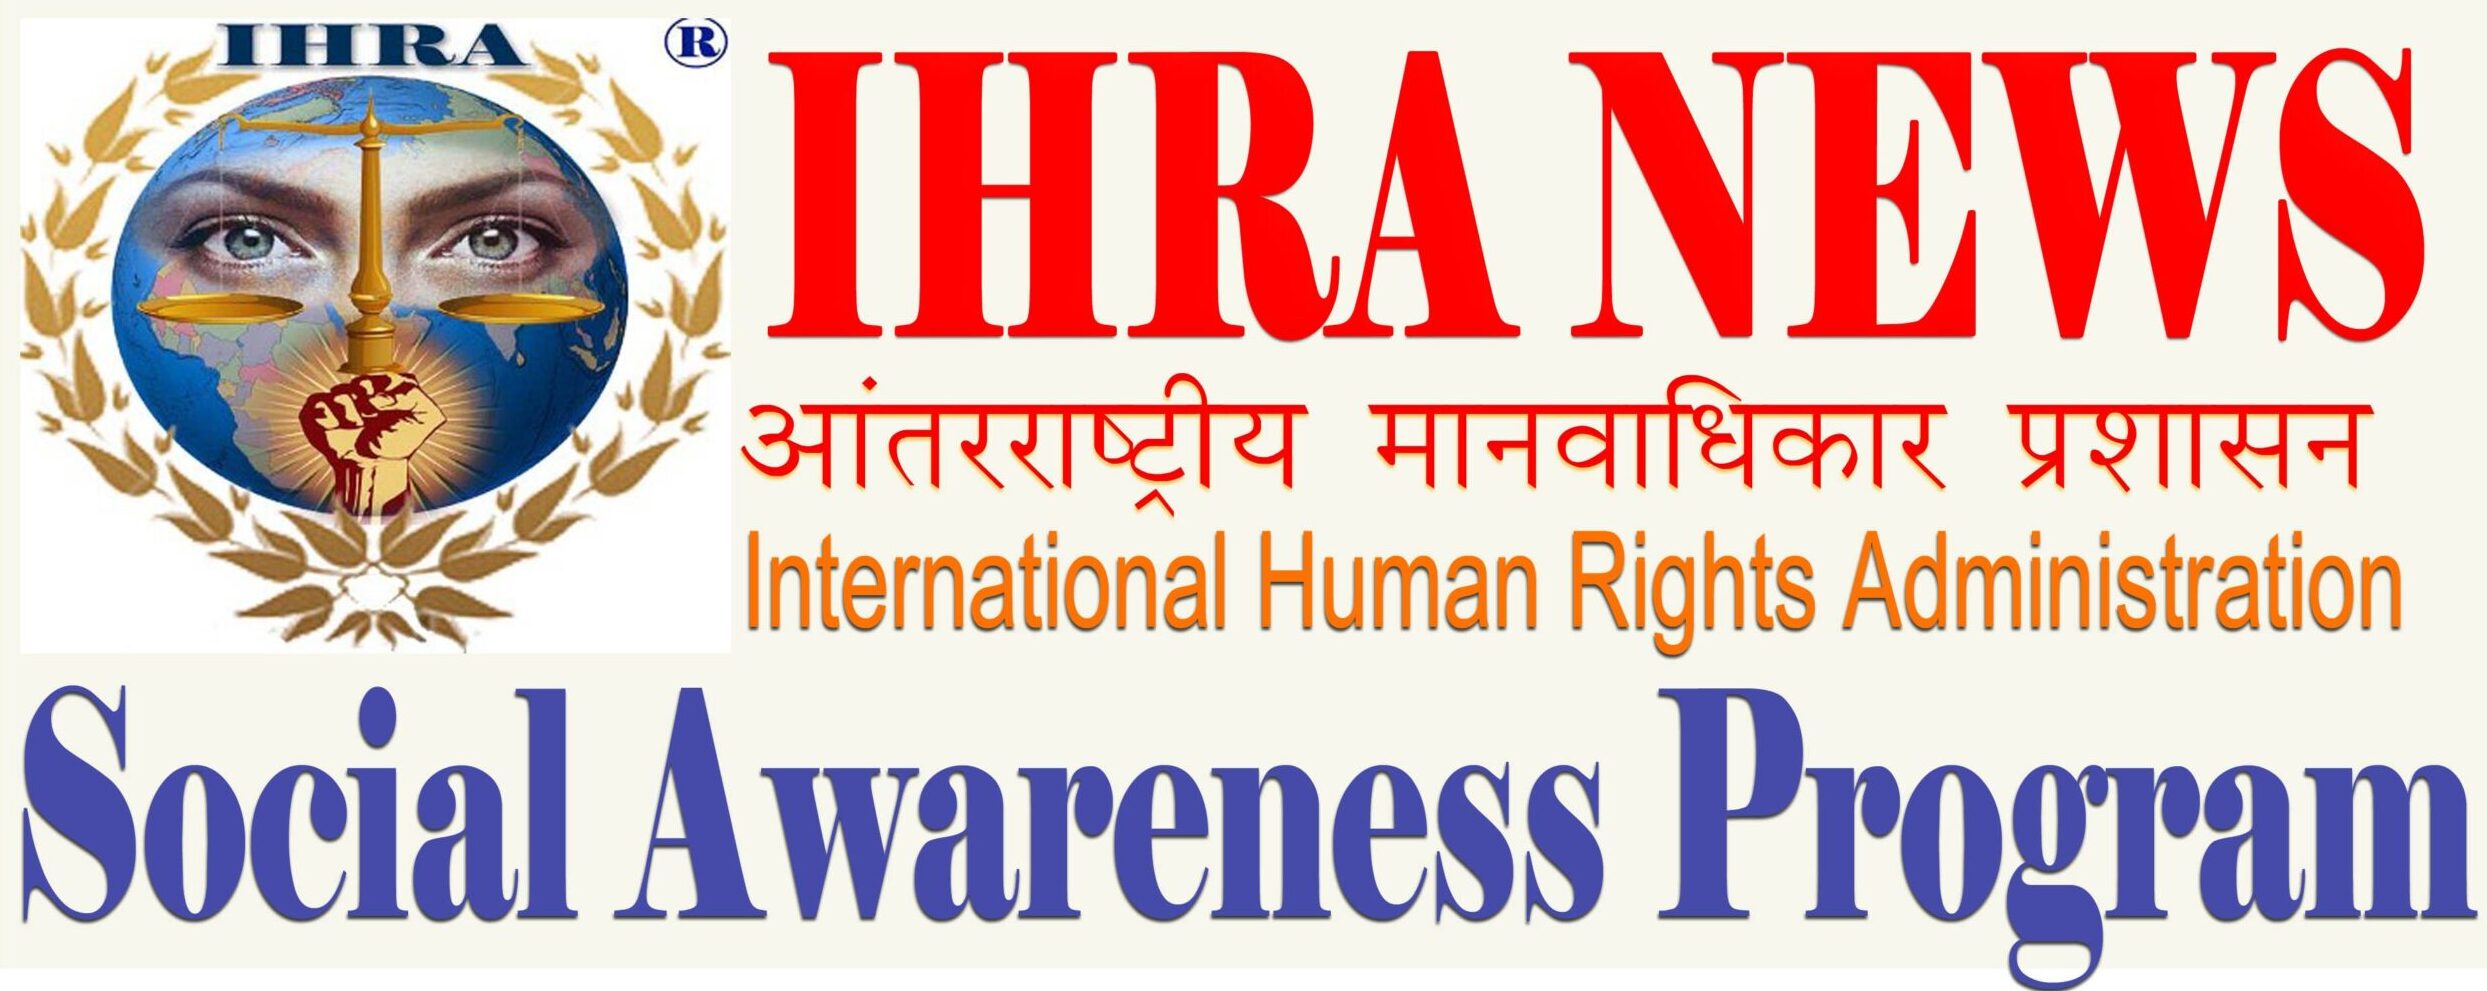 IHRA News